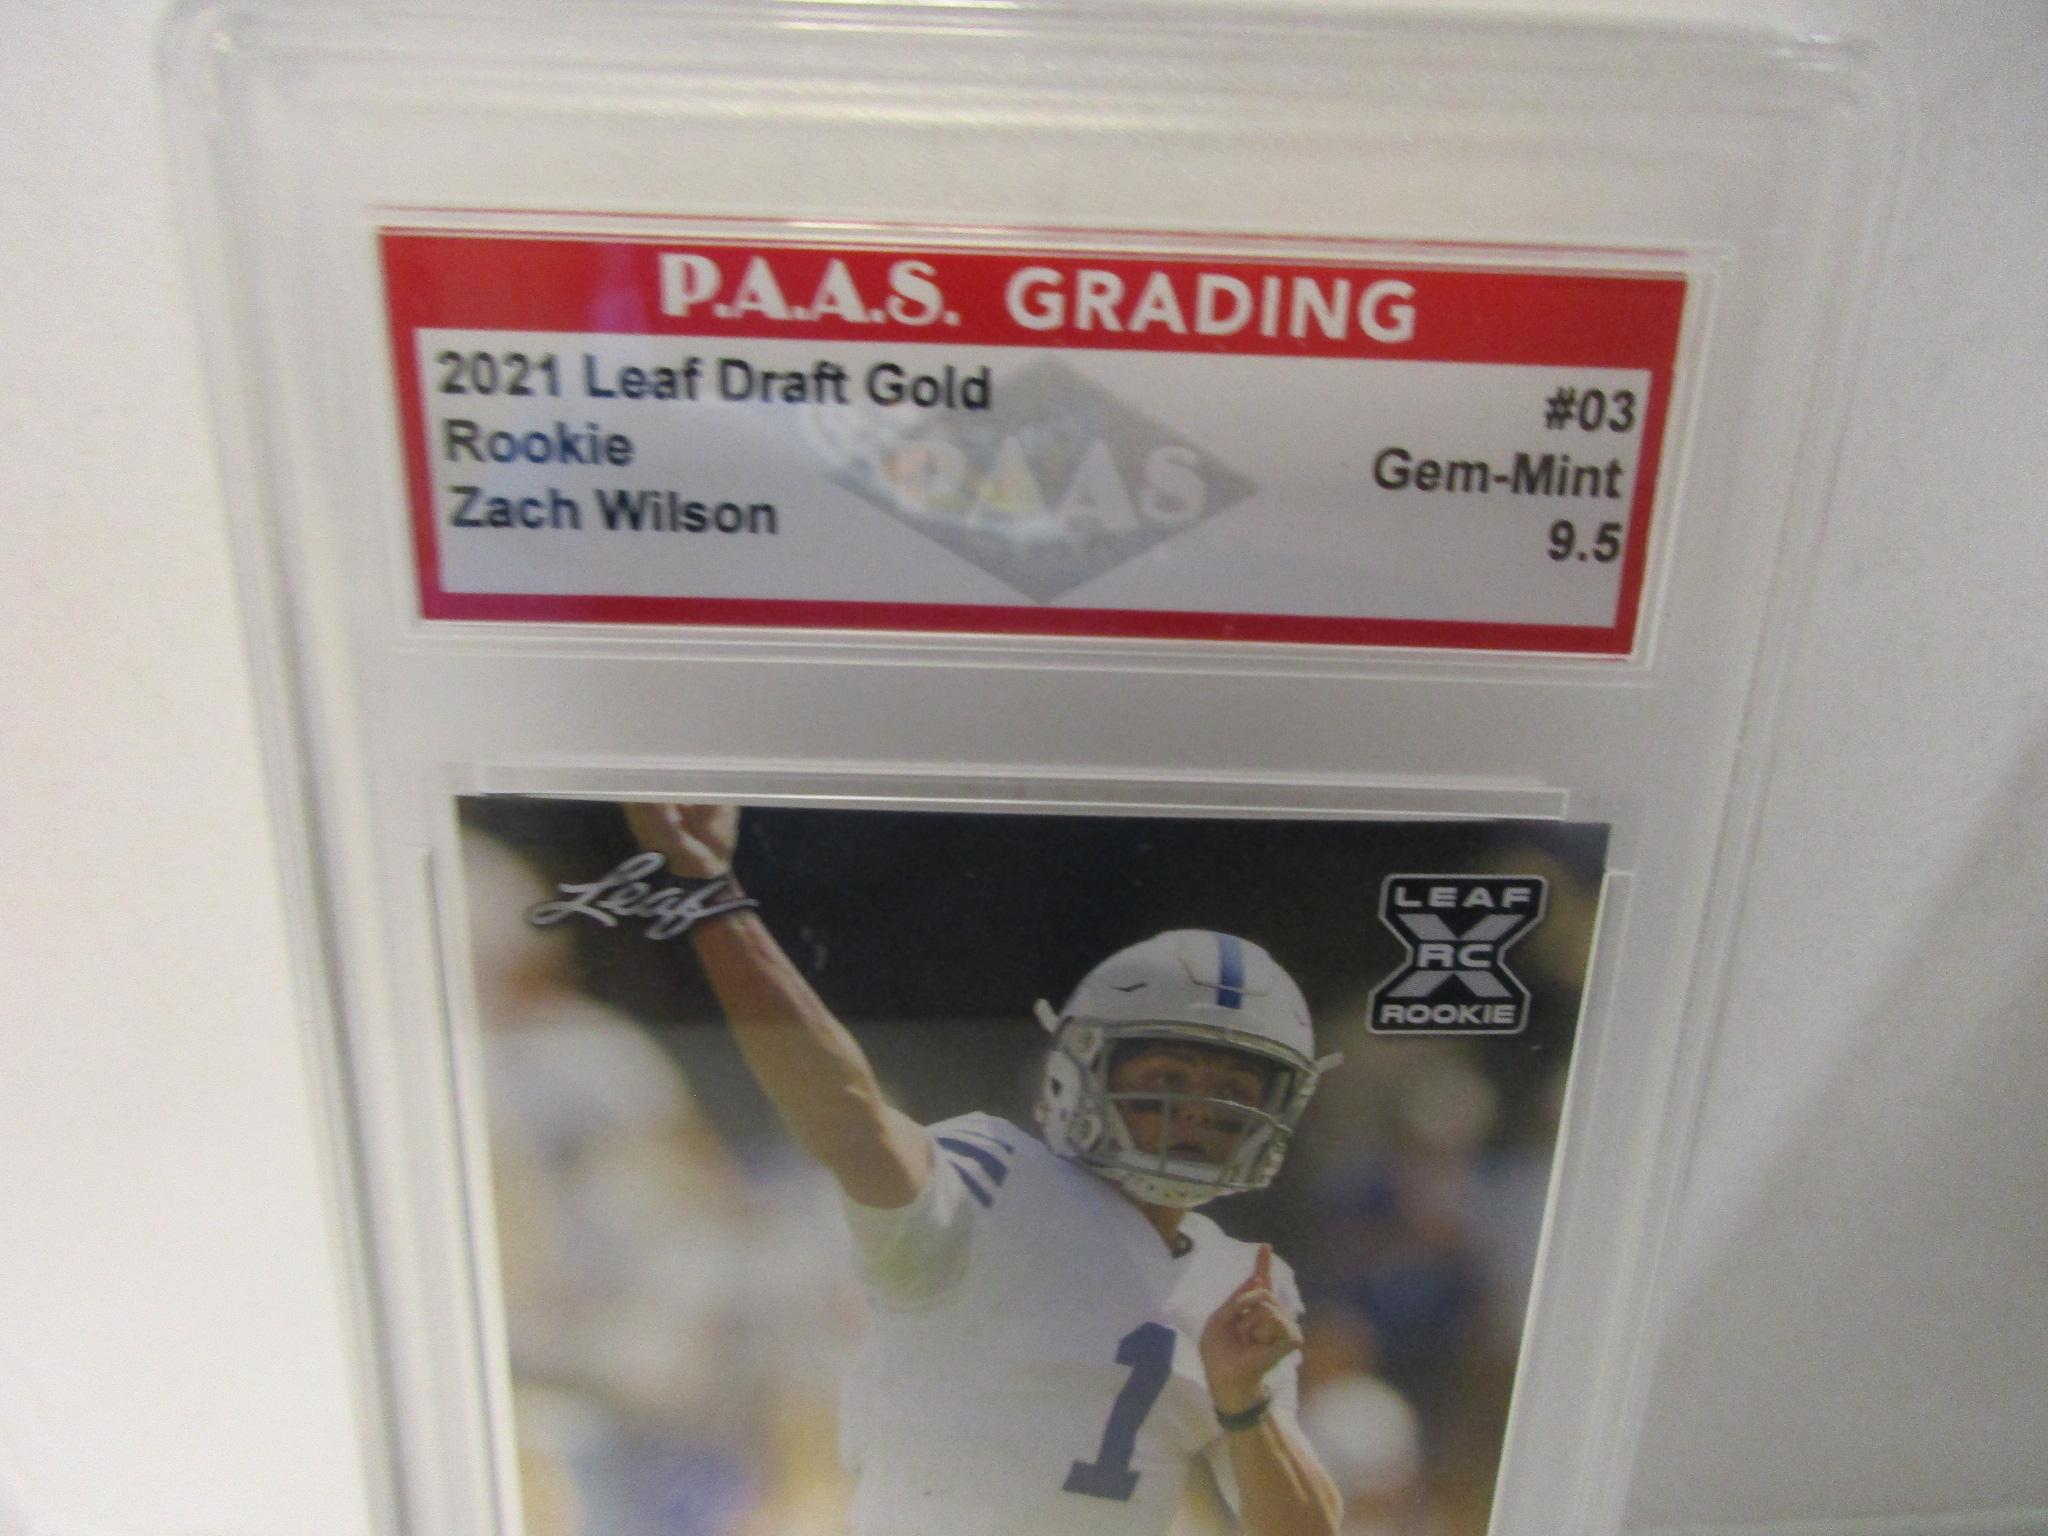 Zach Wilson 2021 Leaf Draft Gold ROOKIE #03 graded PAAS Gem Mint 9.5